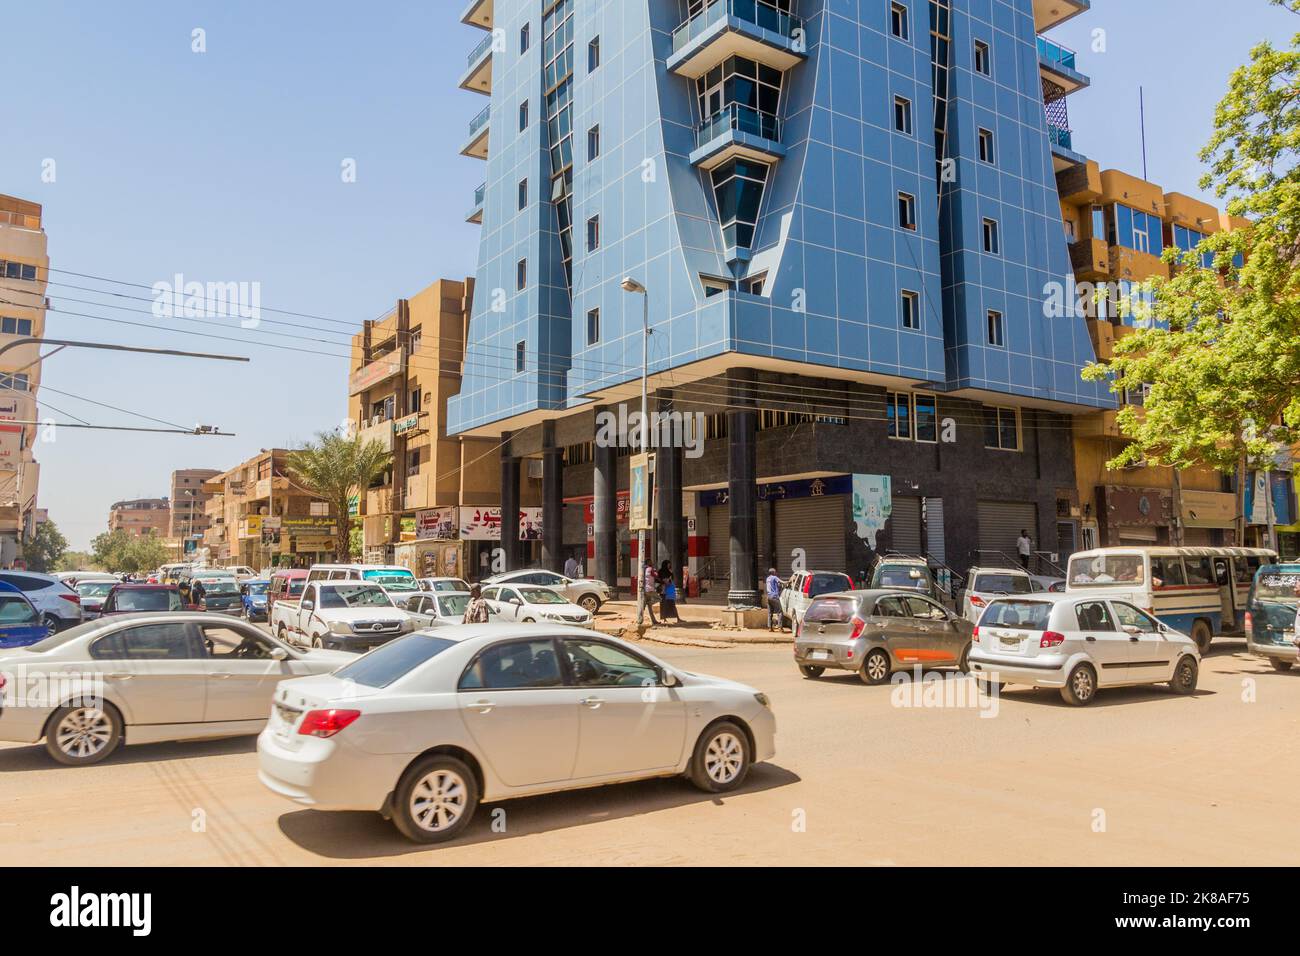 KHARTOUM, SUDAN - MARCH 7, 2019: View of a street in Khartoum, capital of Sudan Stock Photo